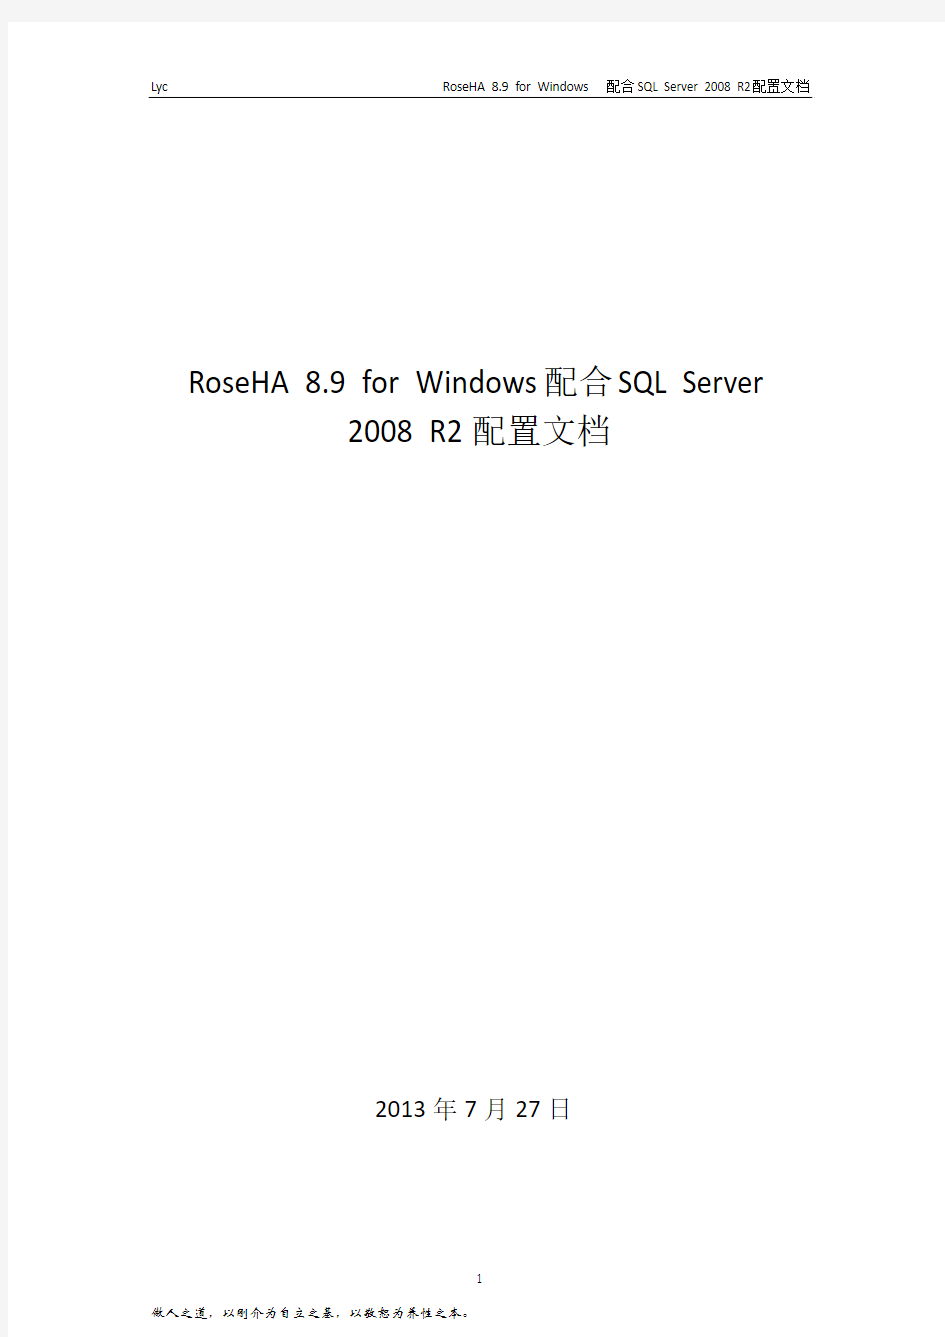 RoseHA 8.9 for Windows配合SQL Server 2008 R2配置文档